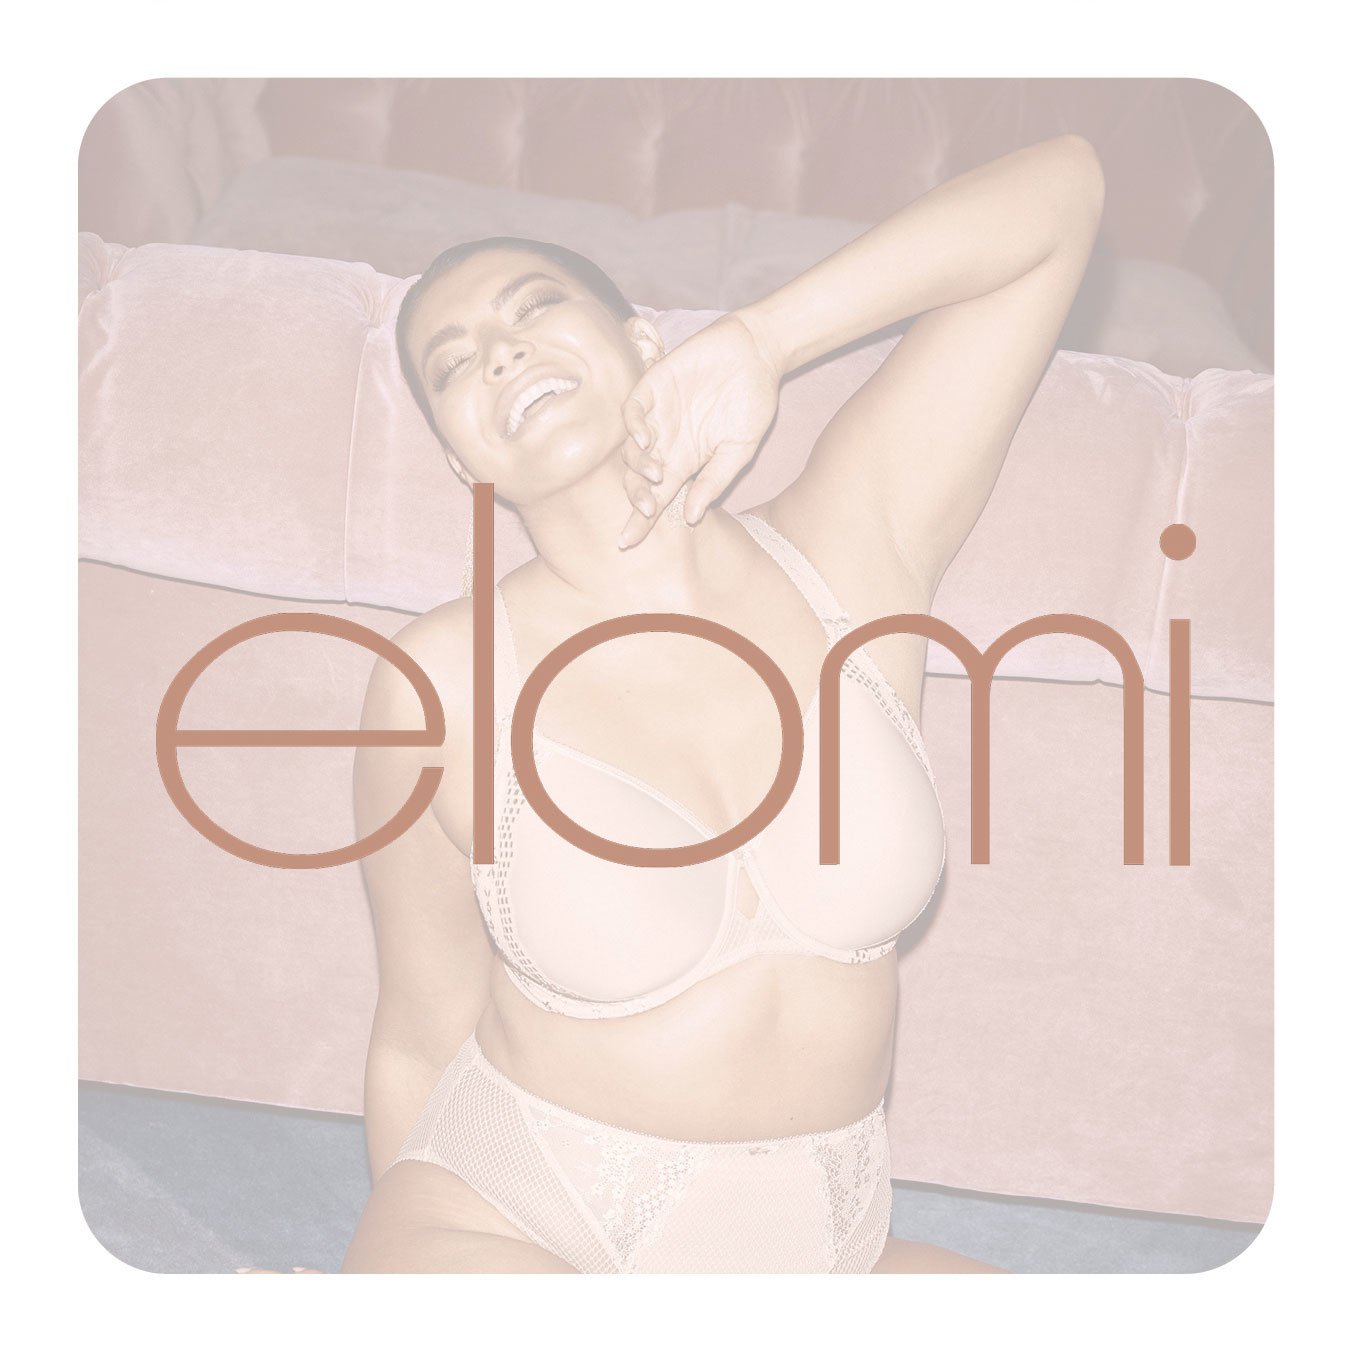 Elomi - Allure Intimate Apparel